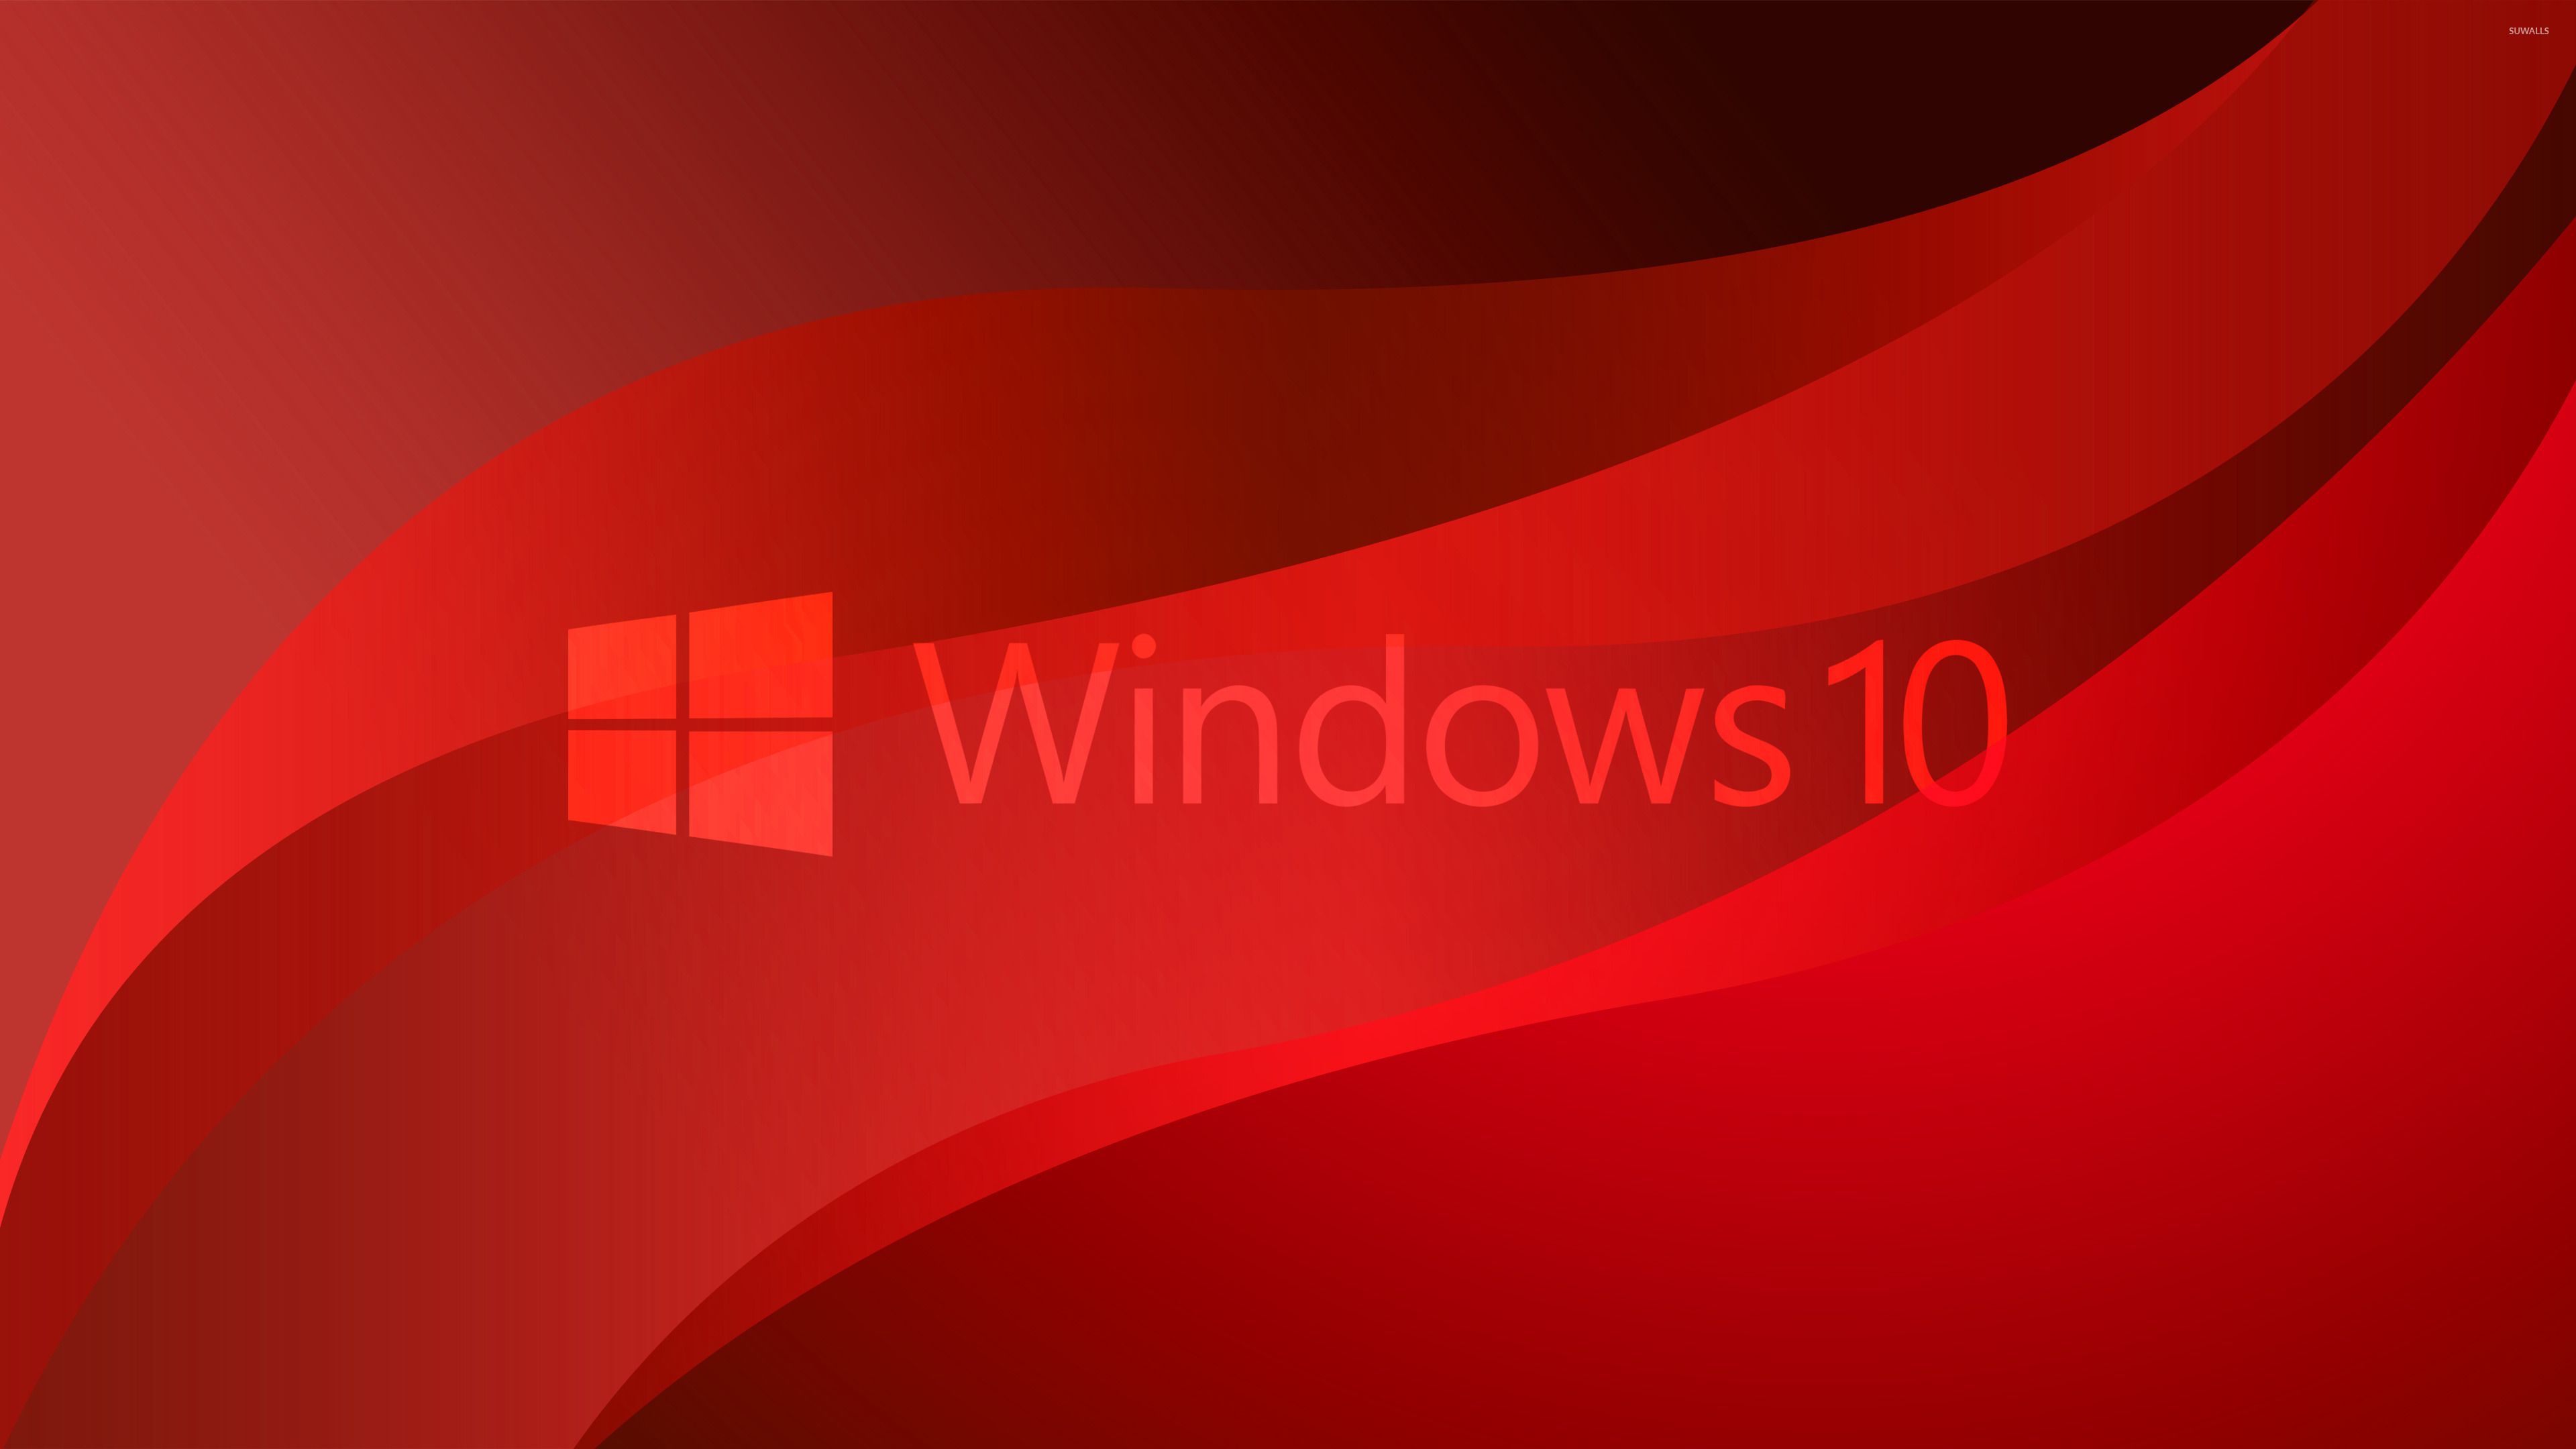 Windows 10 transparent logo on red .suwalls.com